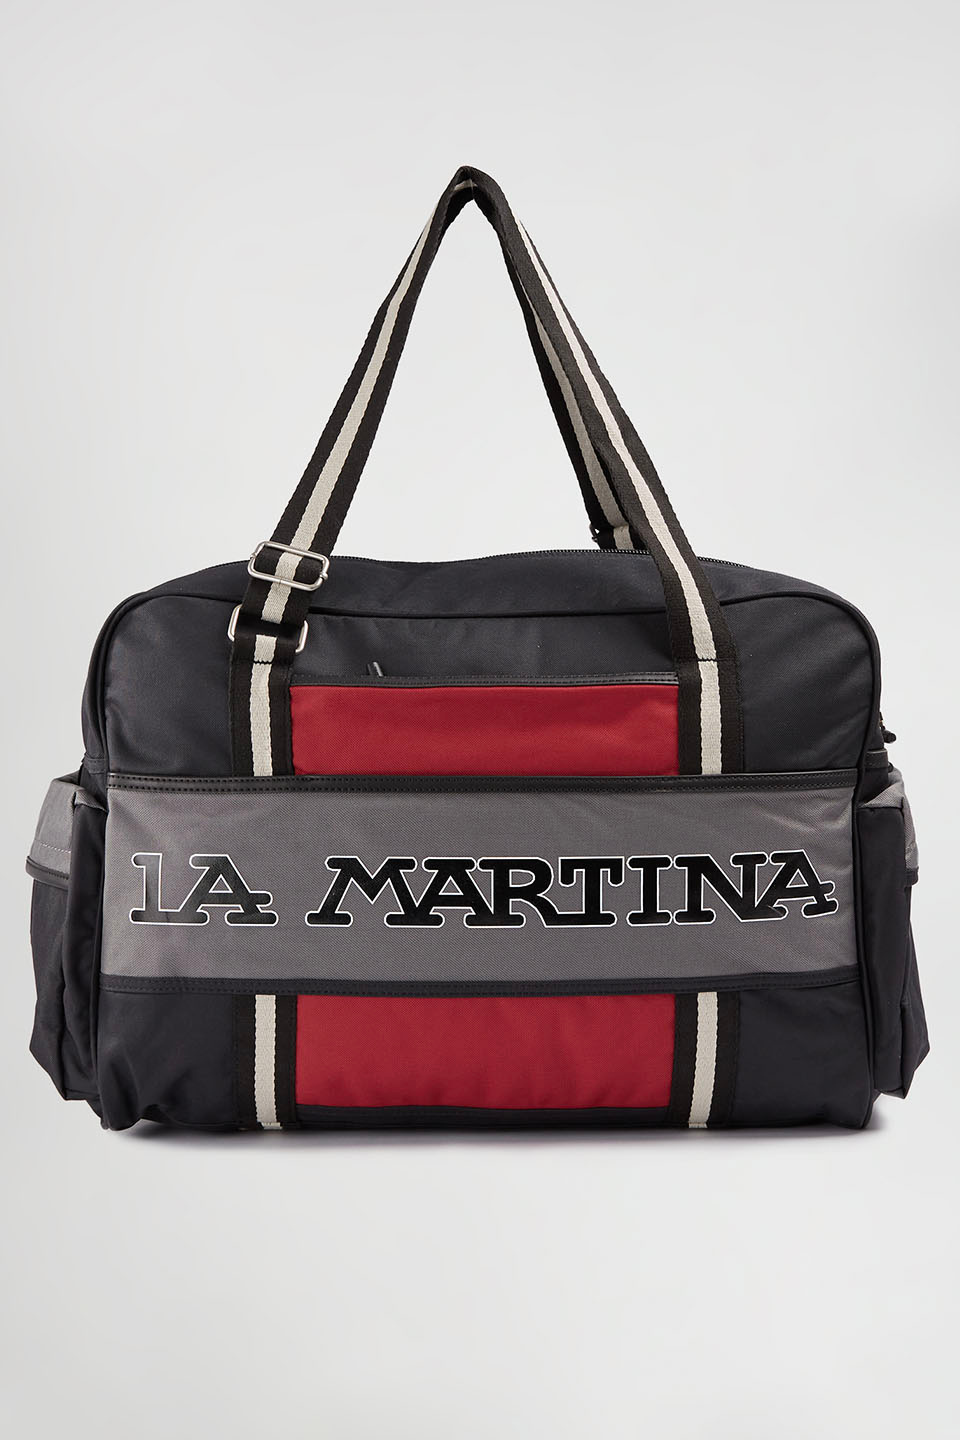 Borsone in nylon | La Martina - Official Online Shop